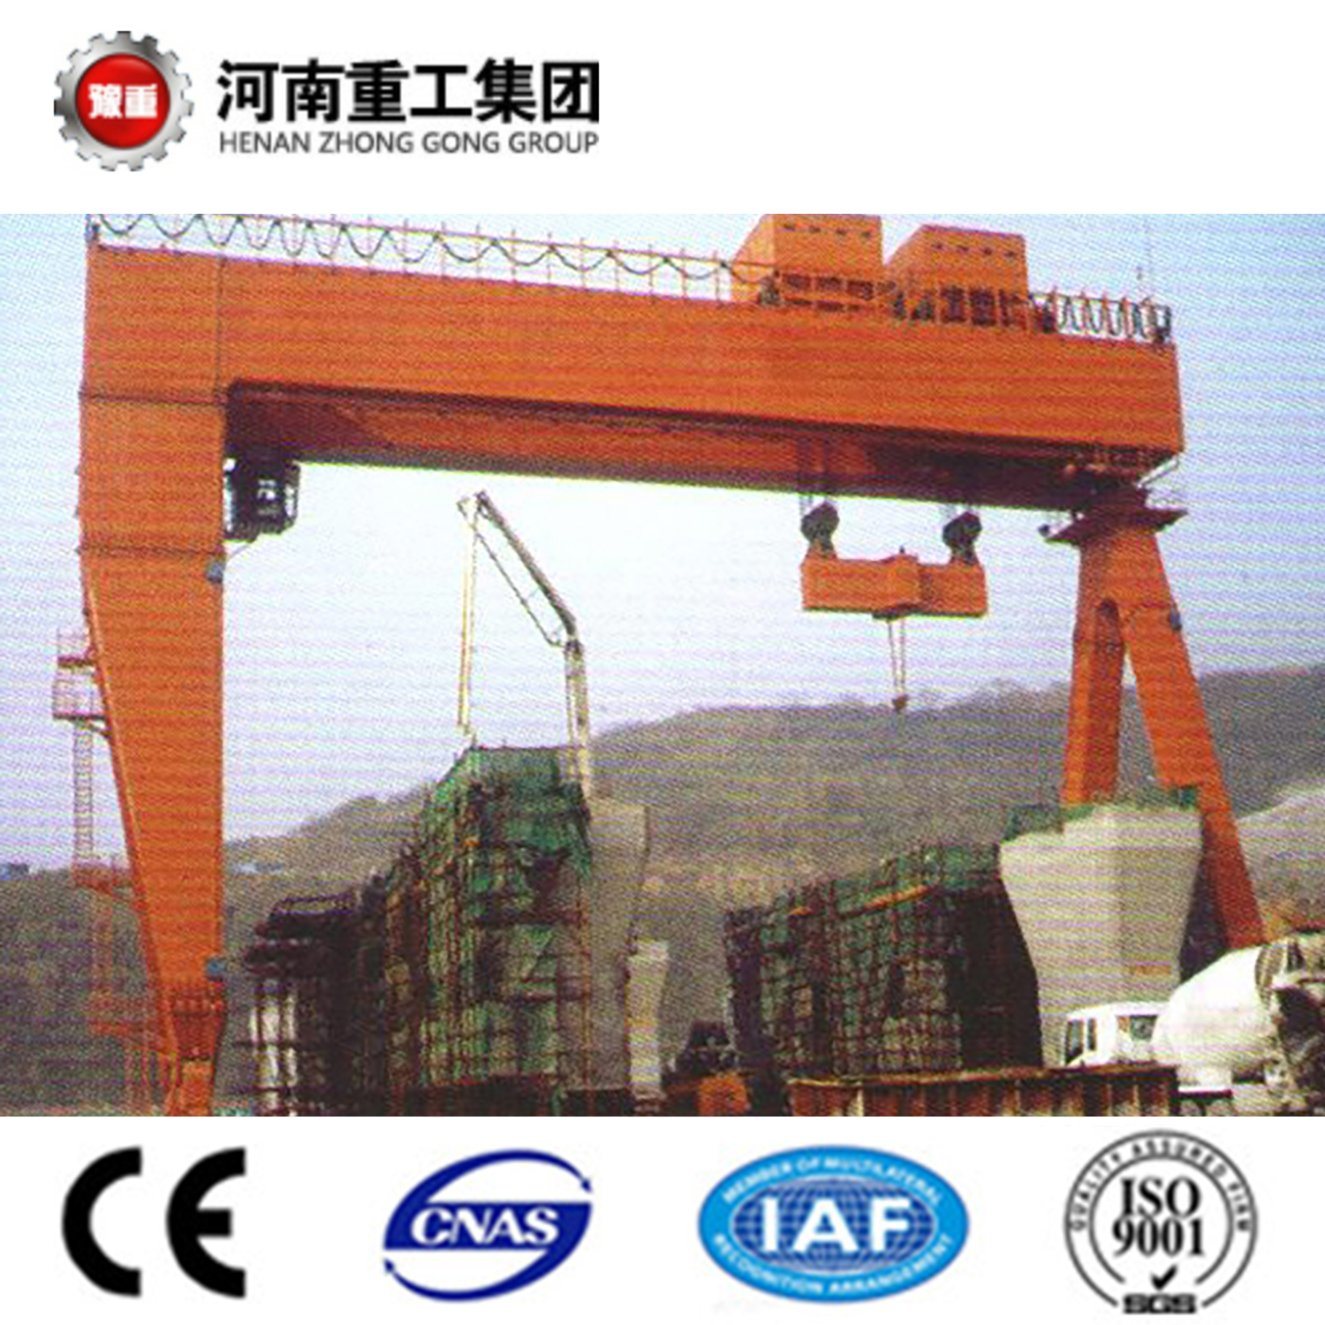 FEM 4m Class Double Beam Gantry/Door Crane For Steel Material, Construction Material Handling